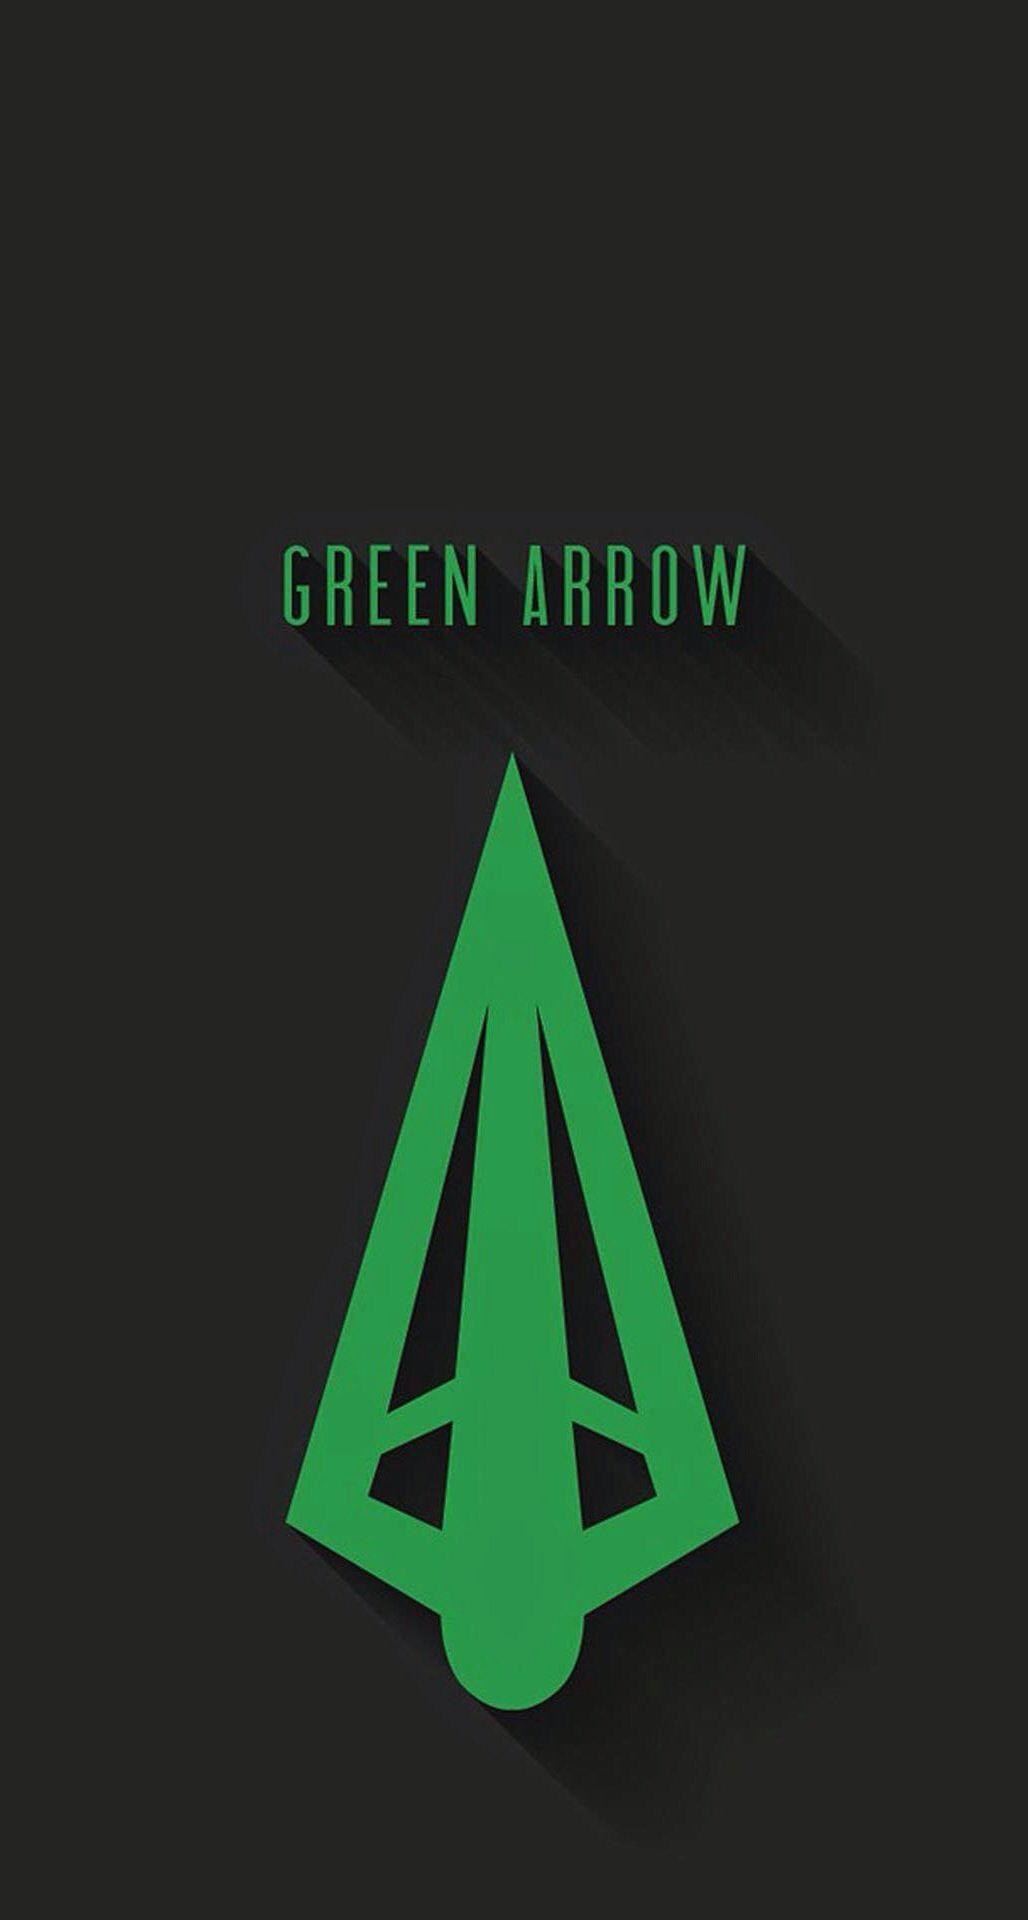 Green Flash Logo - Green Arrow icon (Would make a cool Tattoo!) | DC | Pinterest ...